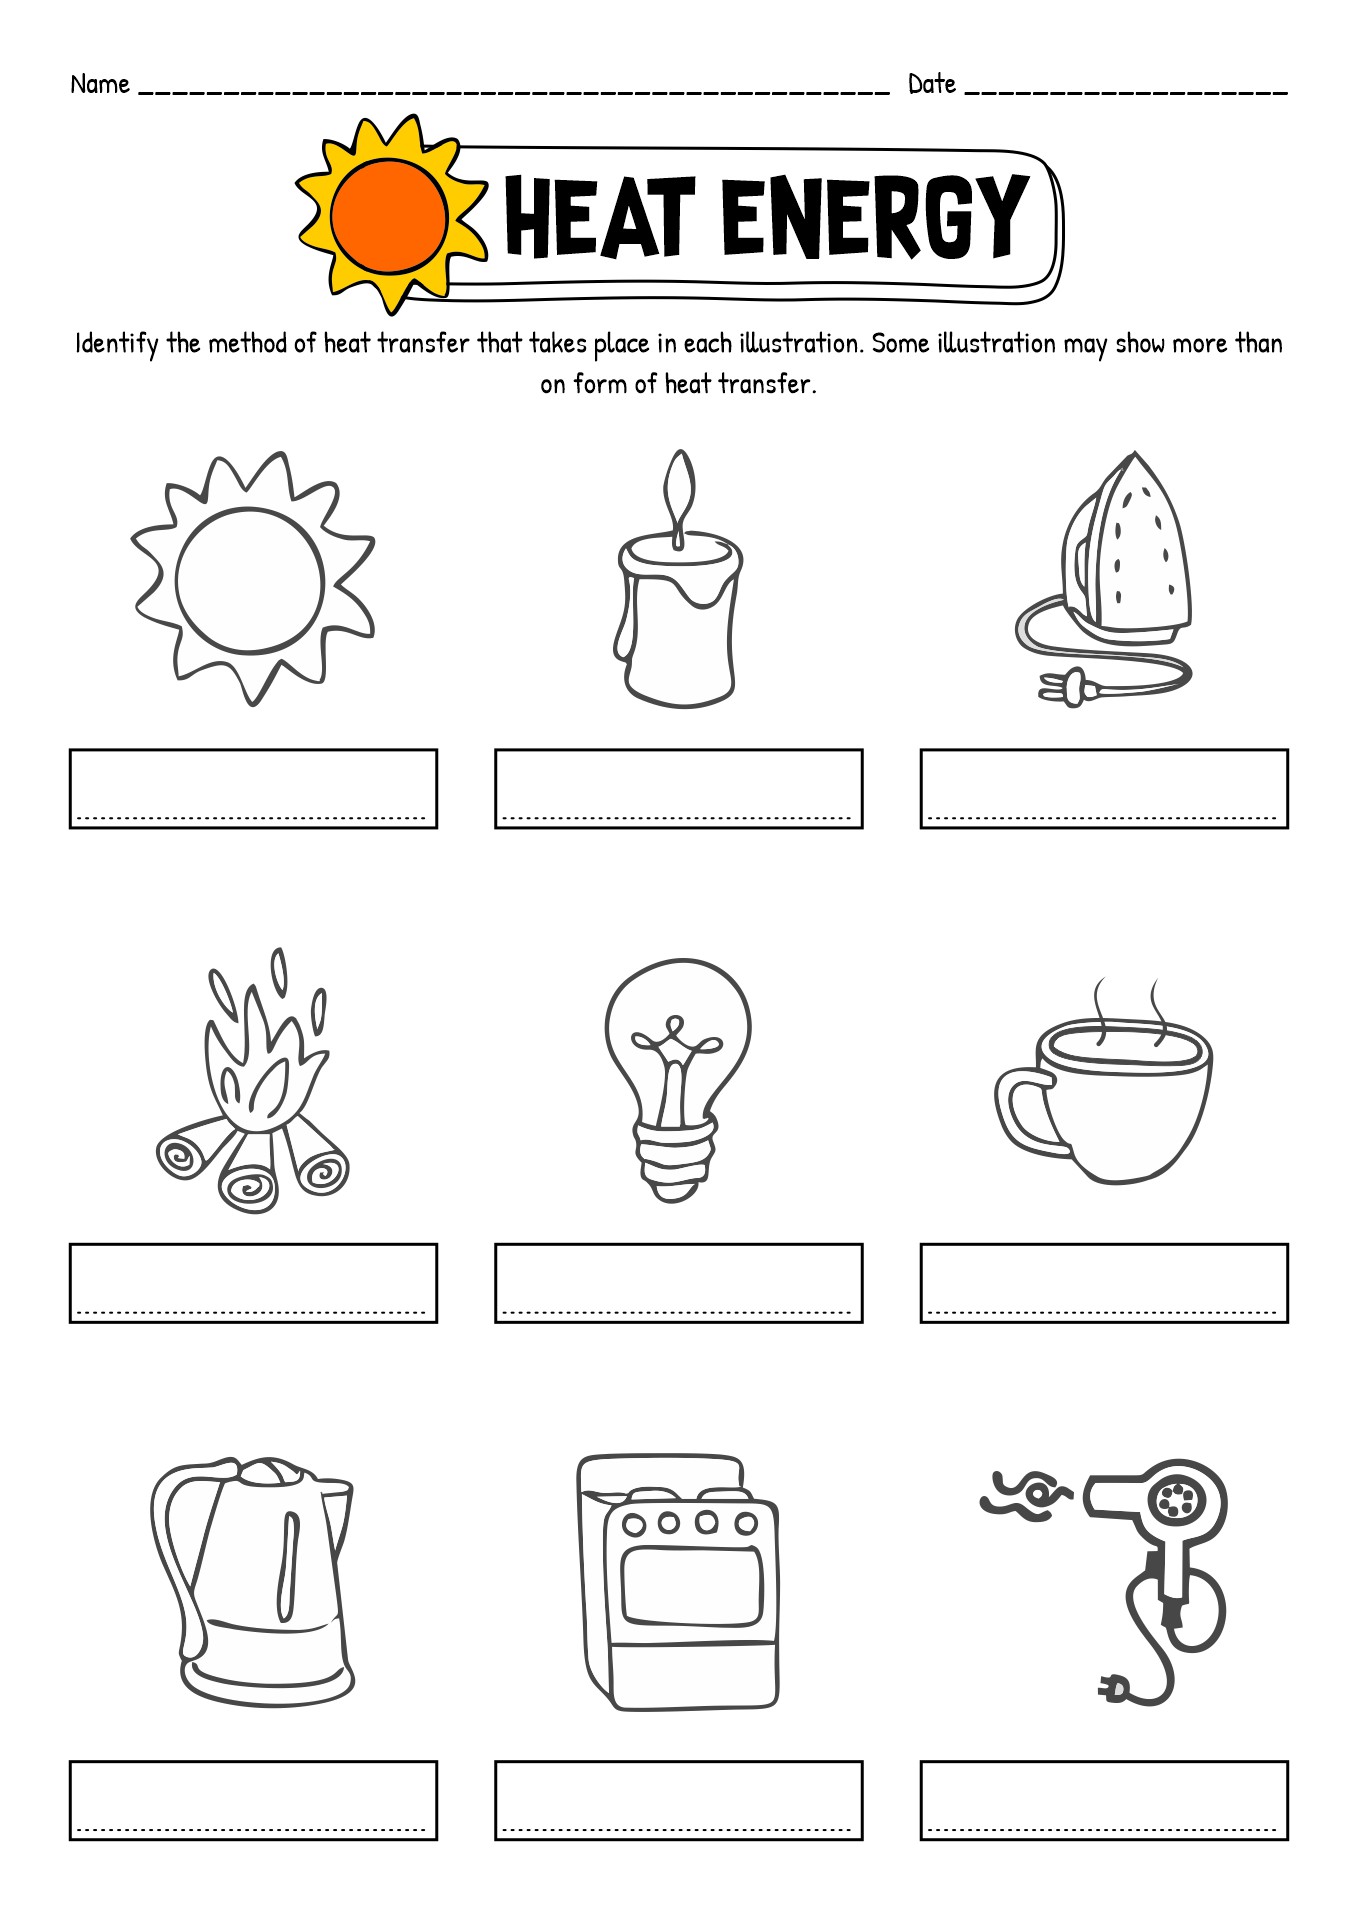 Forms of Heat Energy Worksheet Image